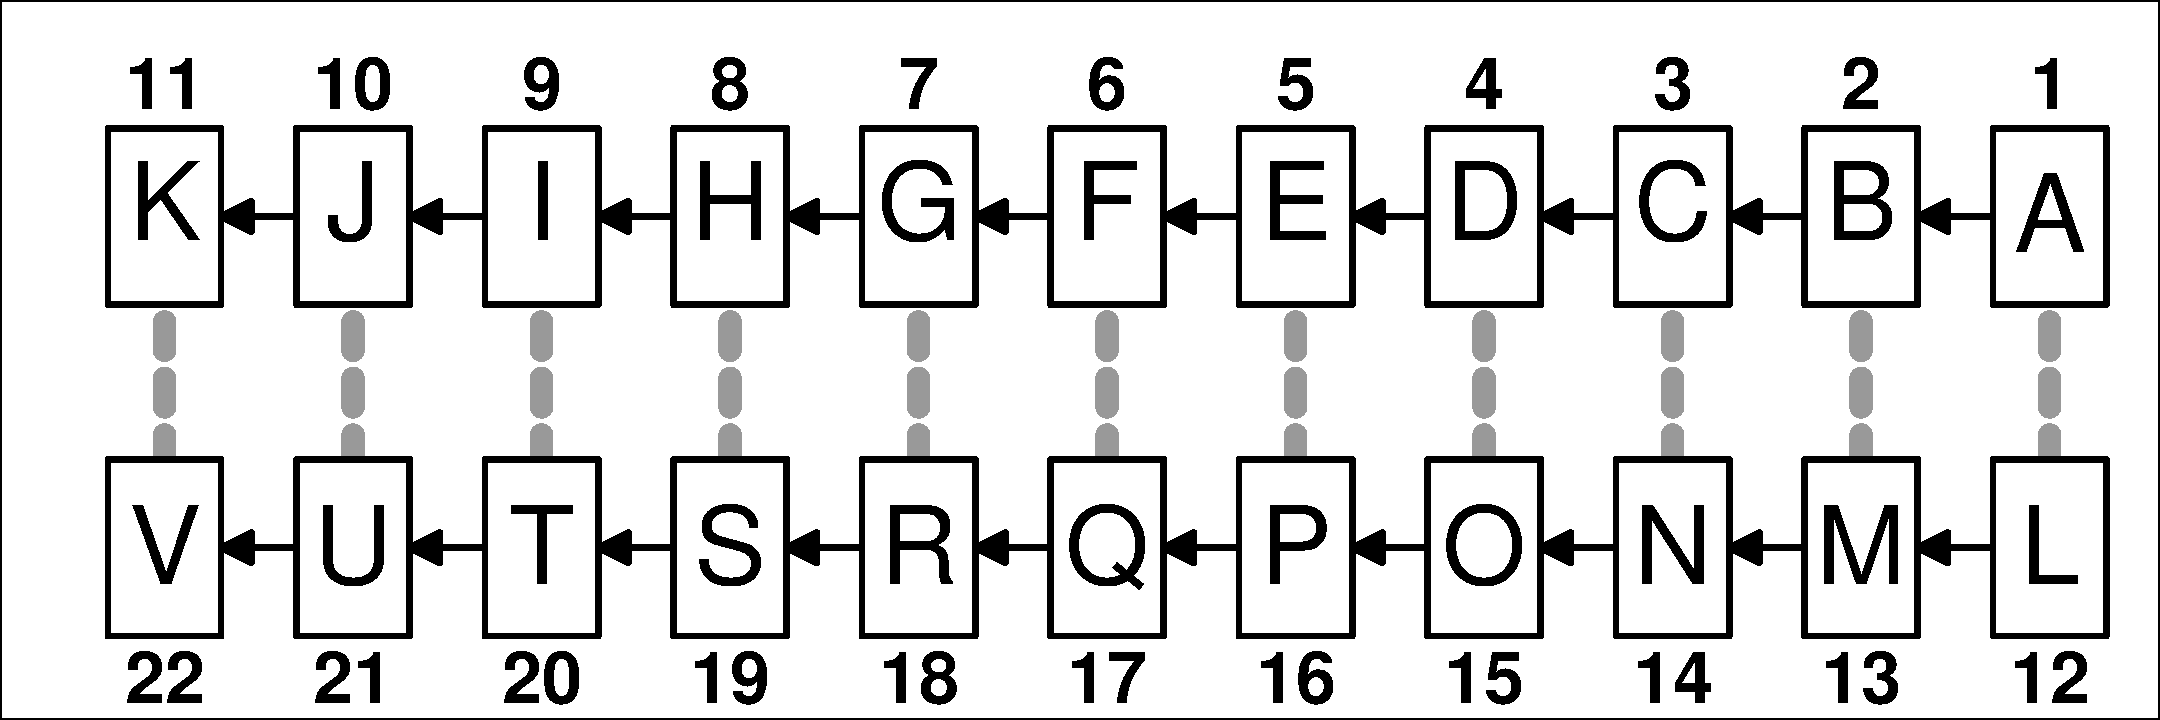 Cipher: albam using English